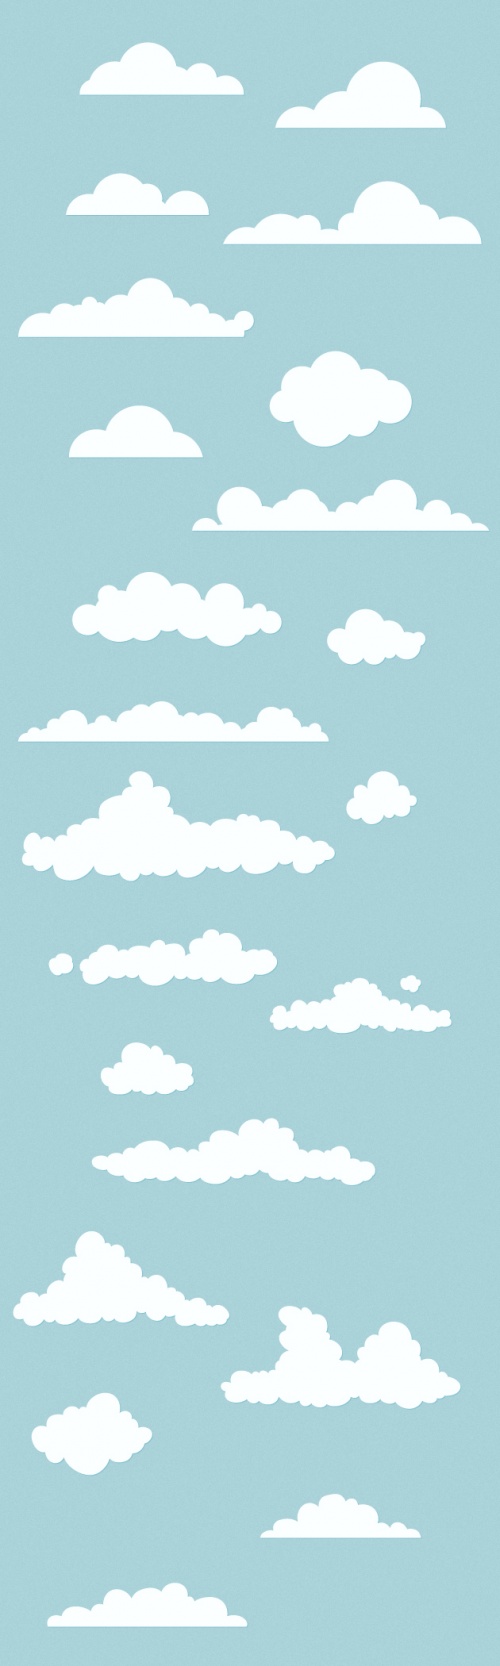 Designtnt - Vector Clouds Collection